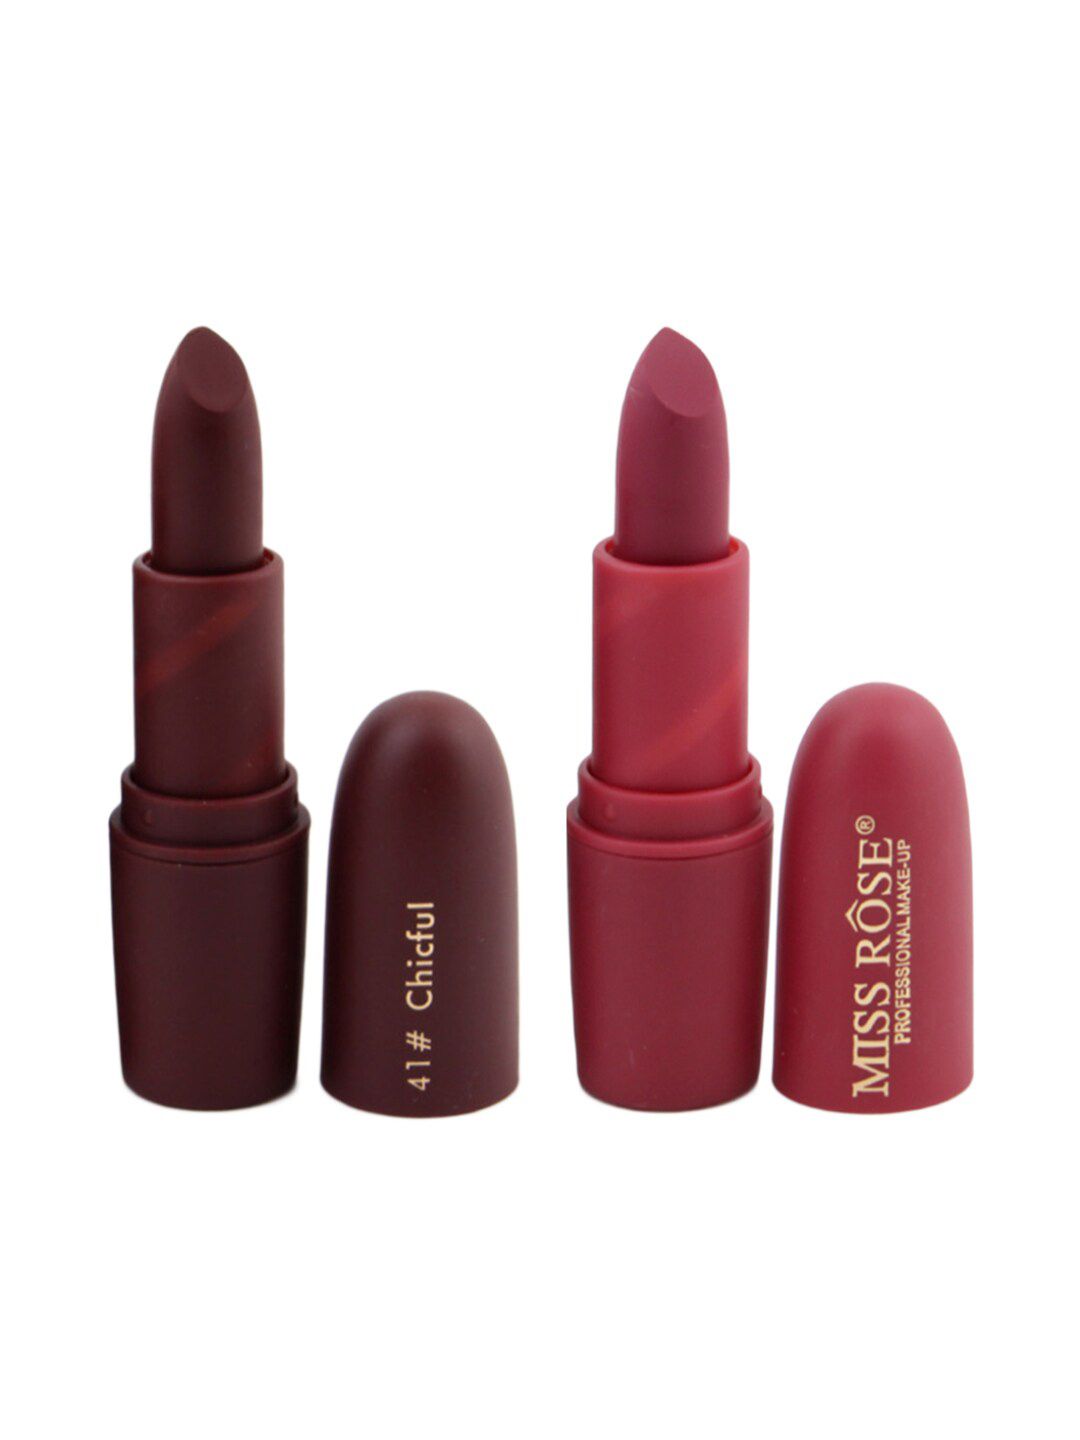 MISS ROSE Professional Make-Up Set of 2 Matte Creamy Lipsticks - Chicful 41 & Chii 49 Price in India